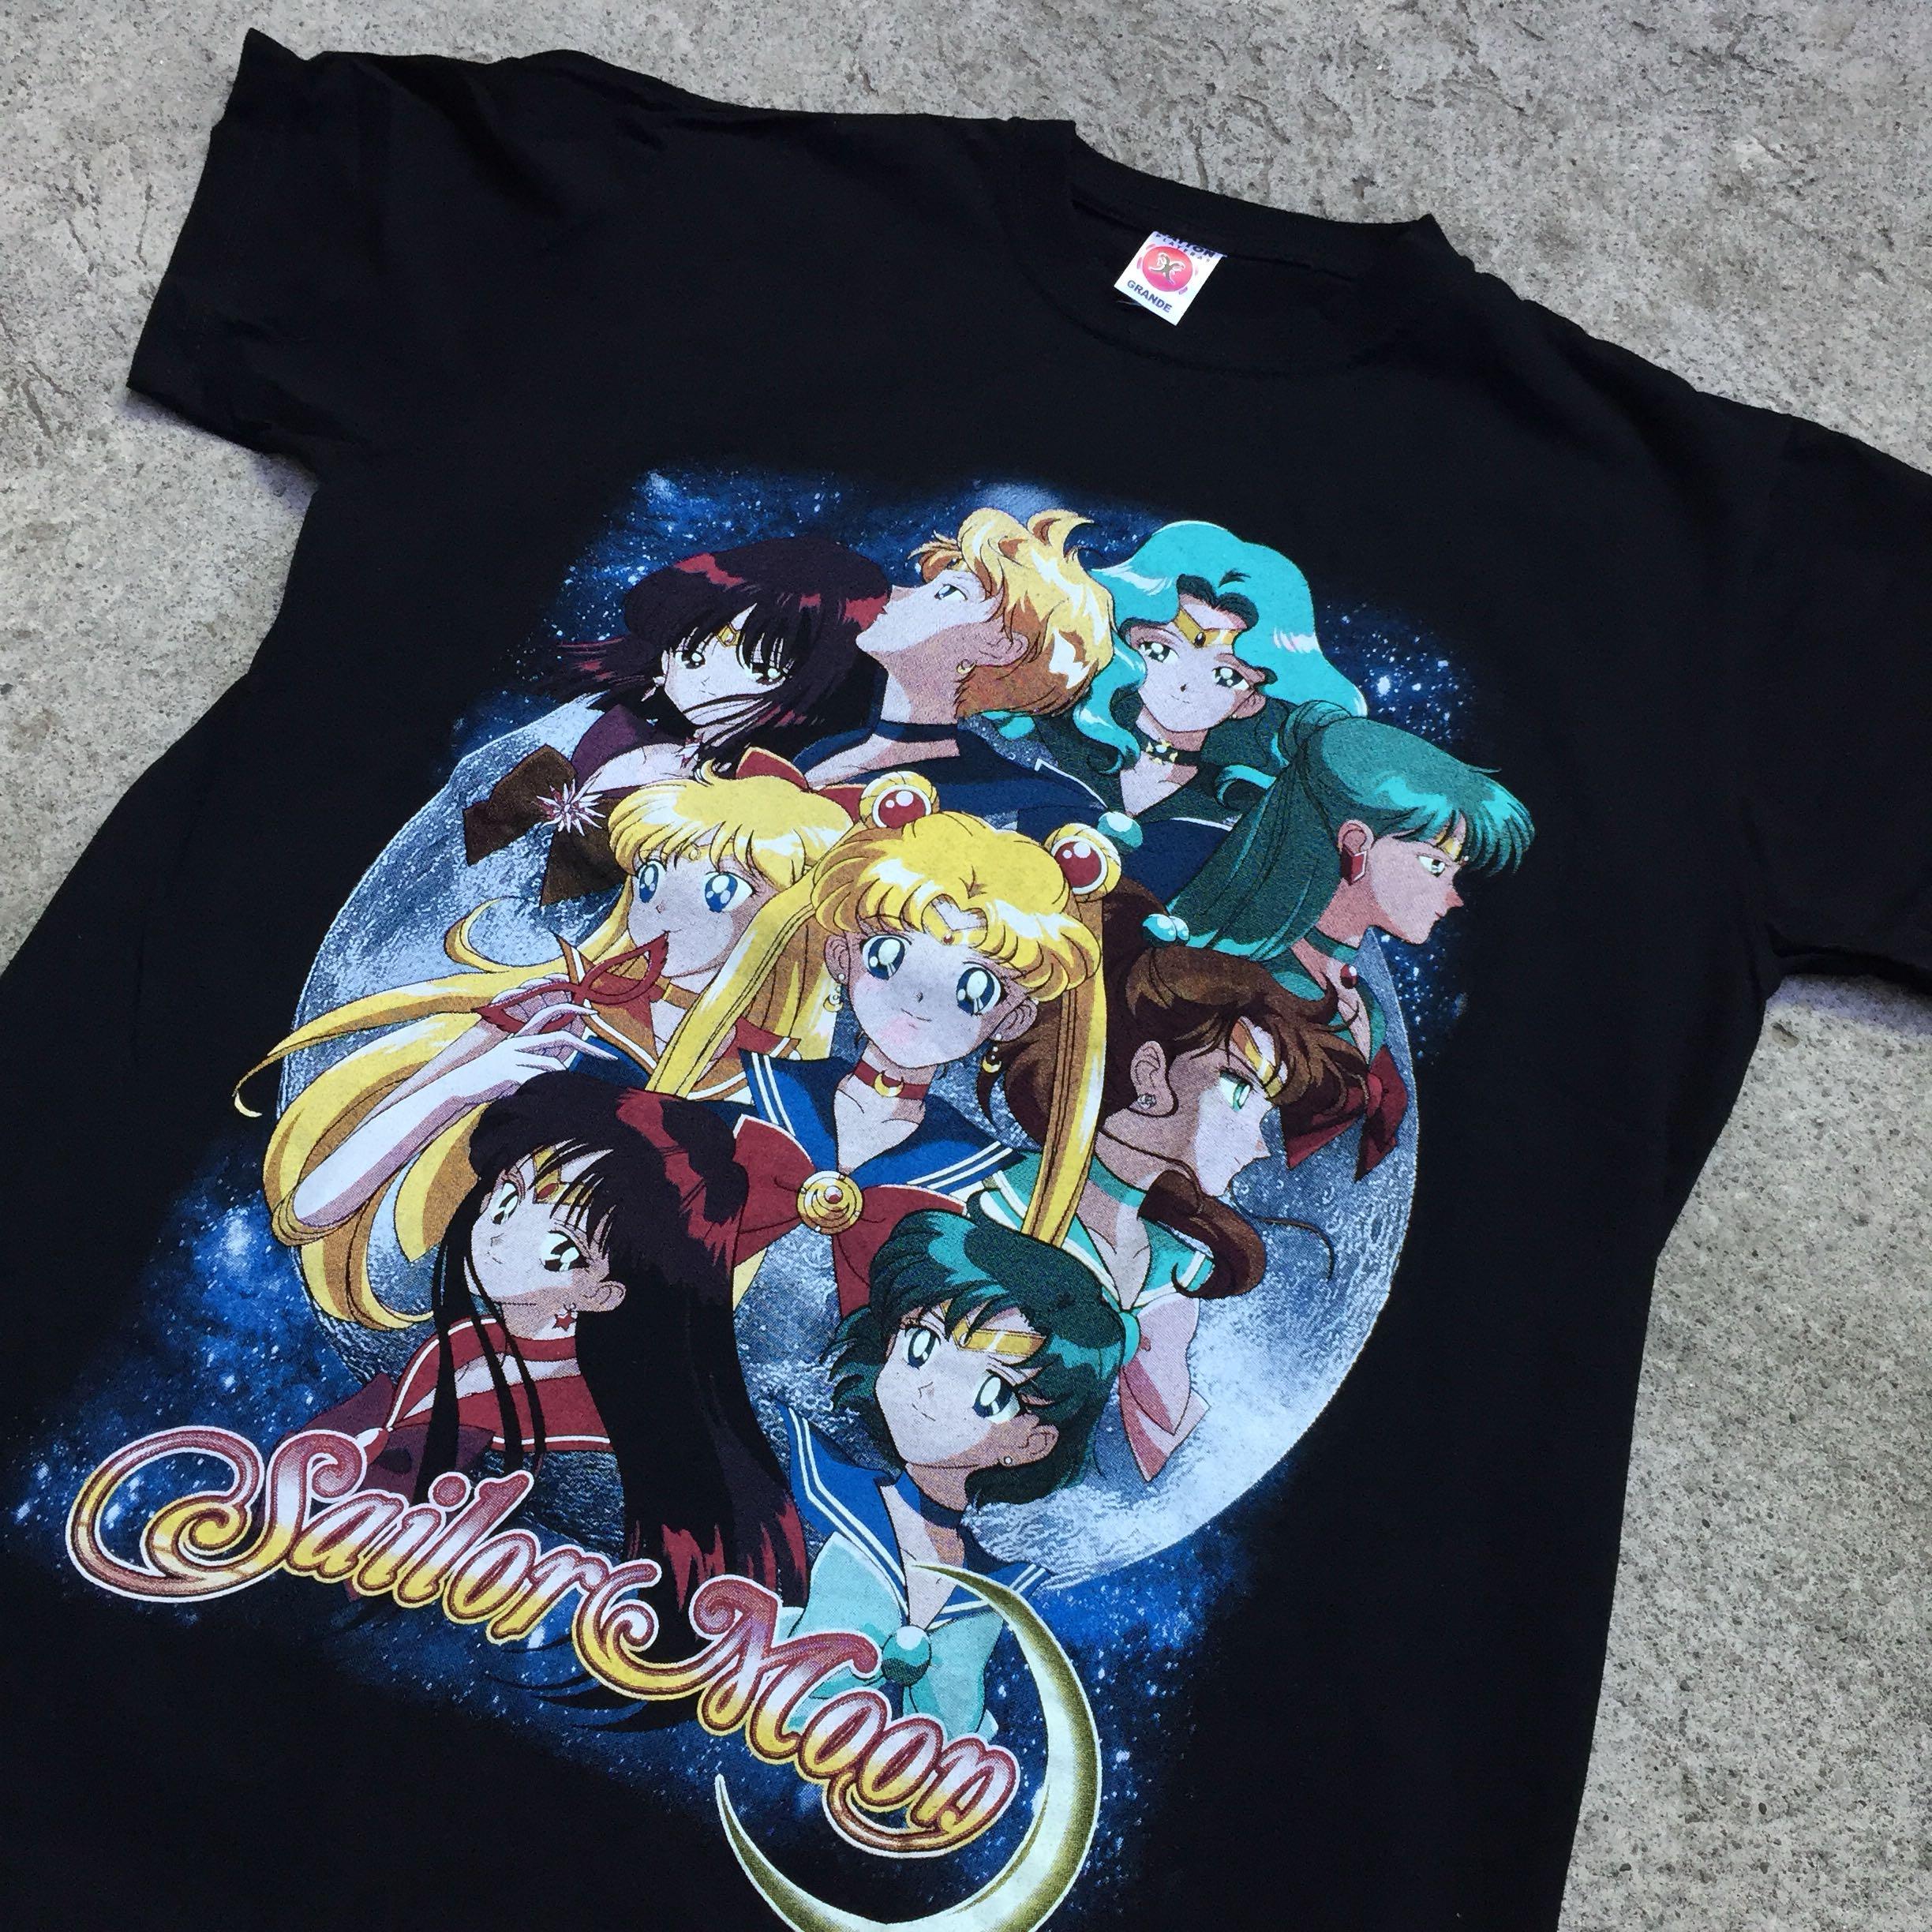 Vintage 90s PROJECT AKO anime t shirt VTG single stitch Sz M  eBay